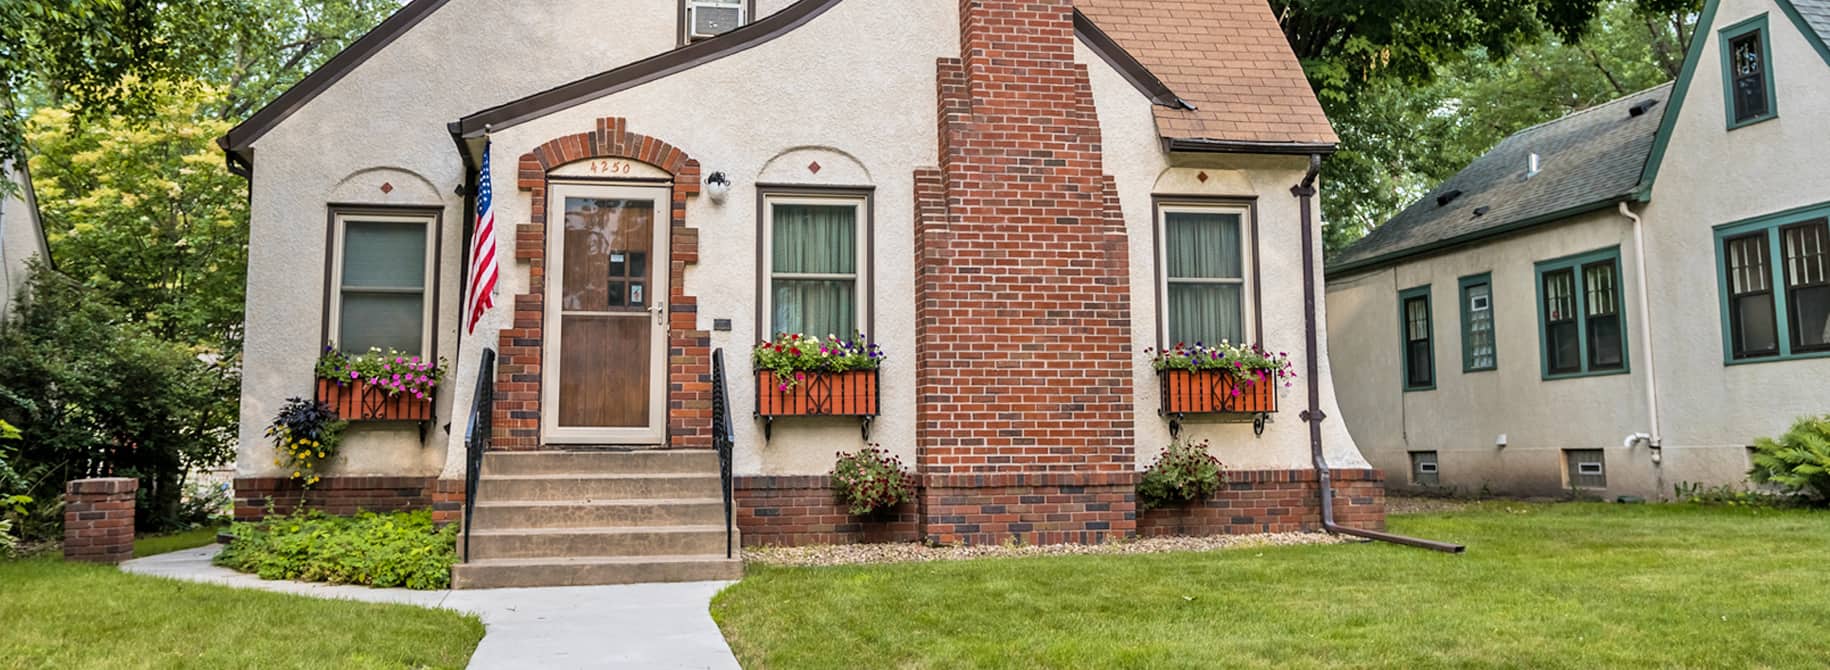 Camden Minneapolis Homes For Sale Neighborhood Guide Edina Realty